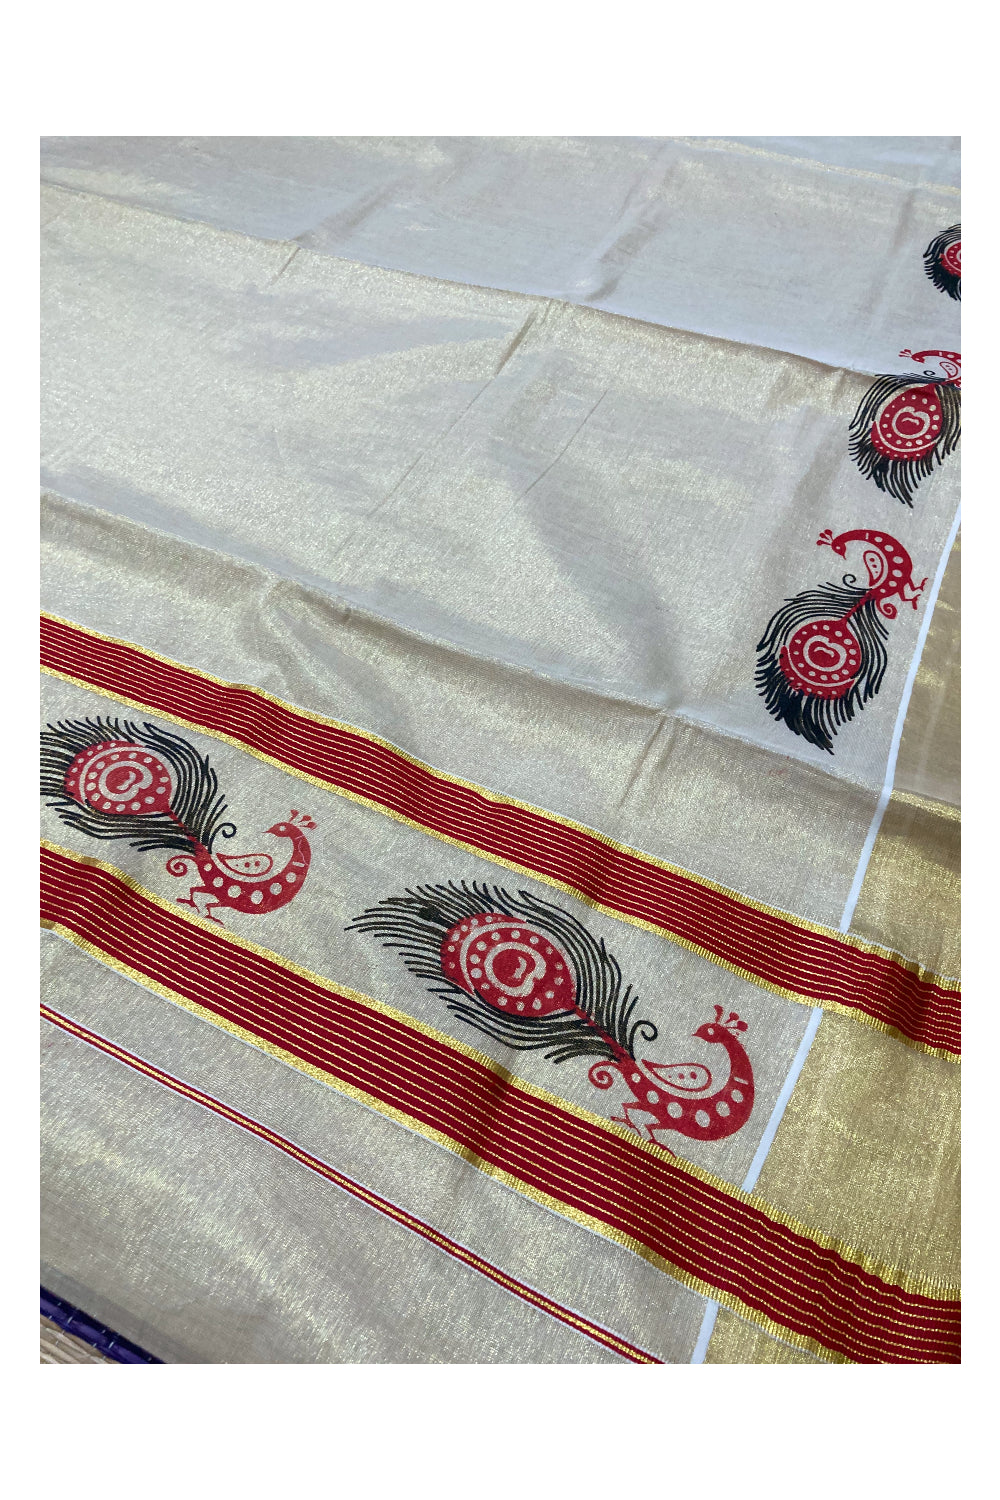 Kerala Tissue Kasavu Saree with Red and Black Peacock Block Printed Design